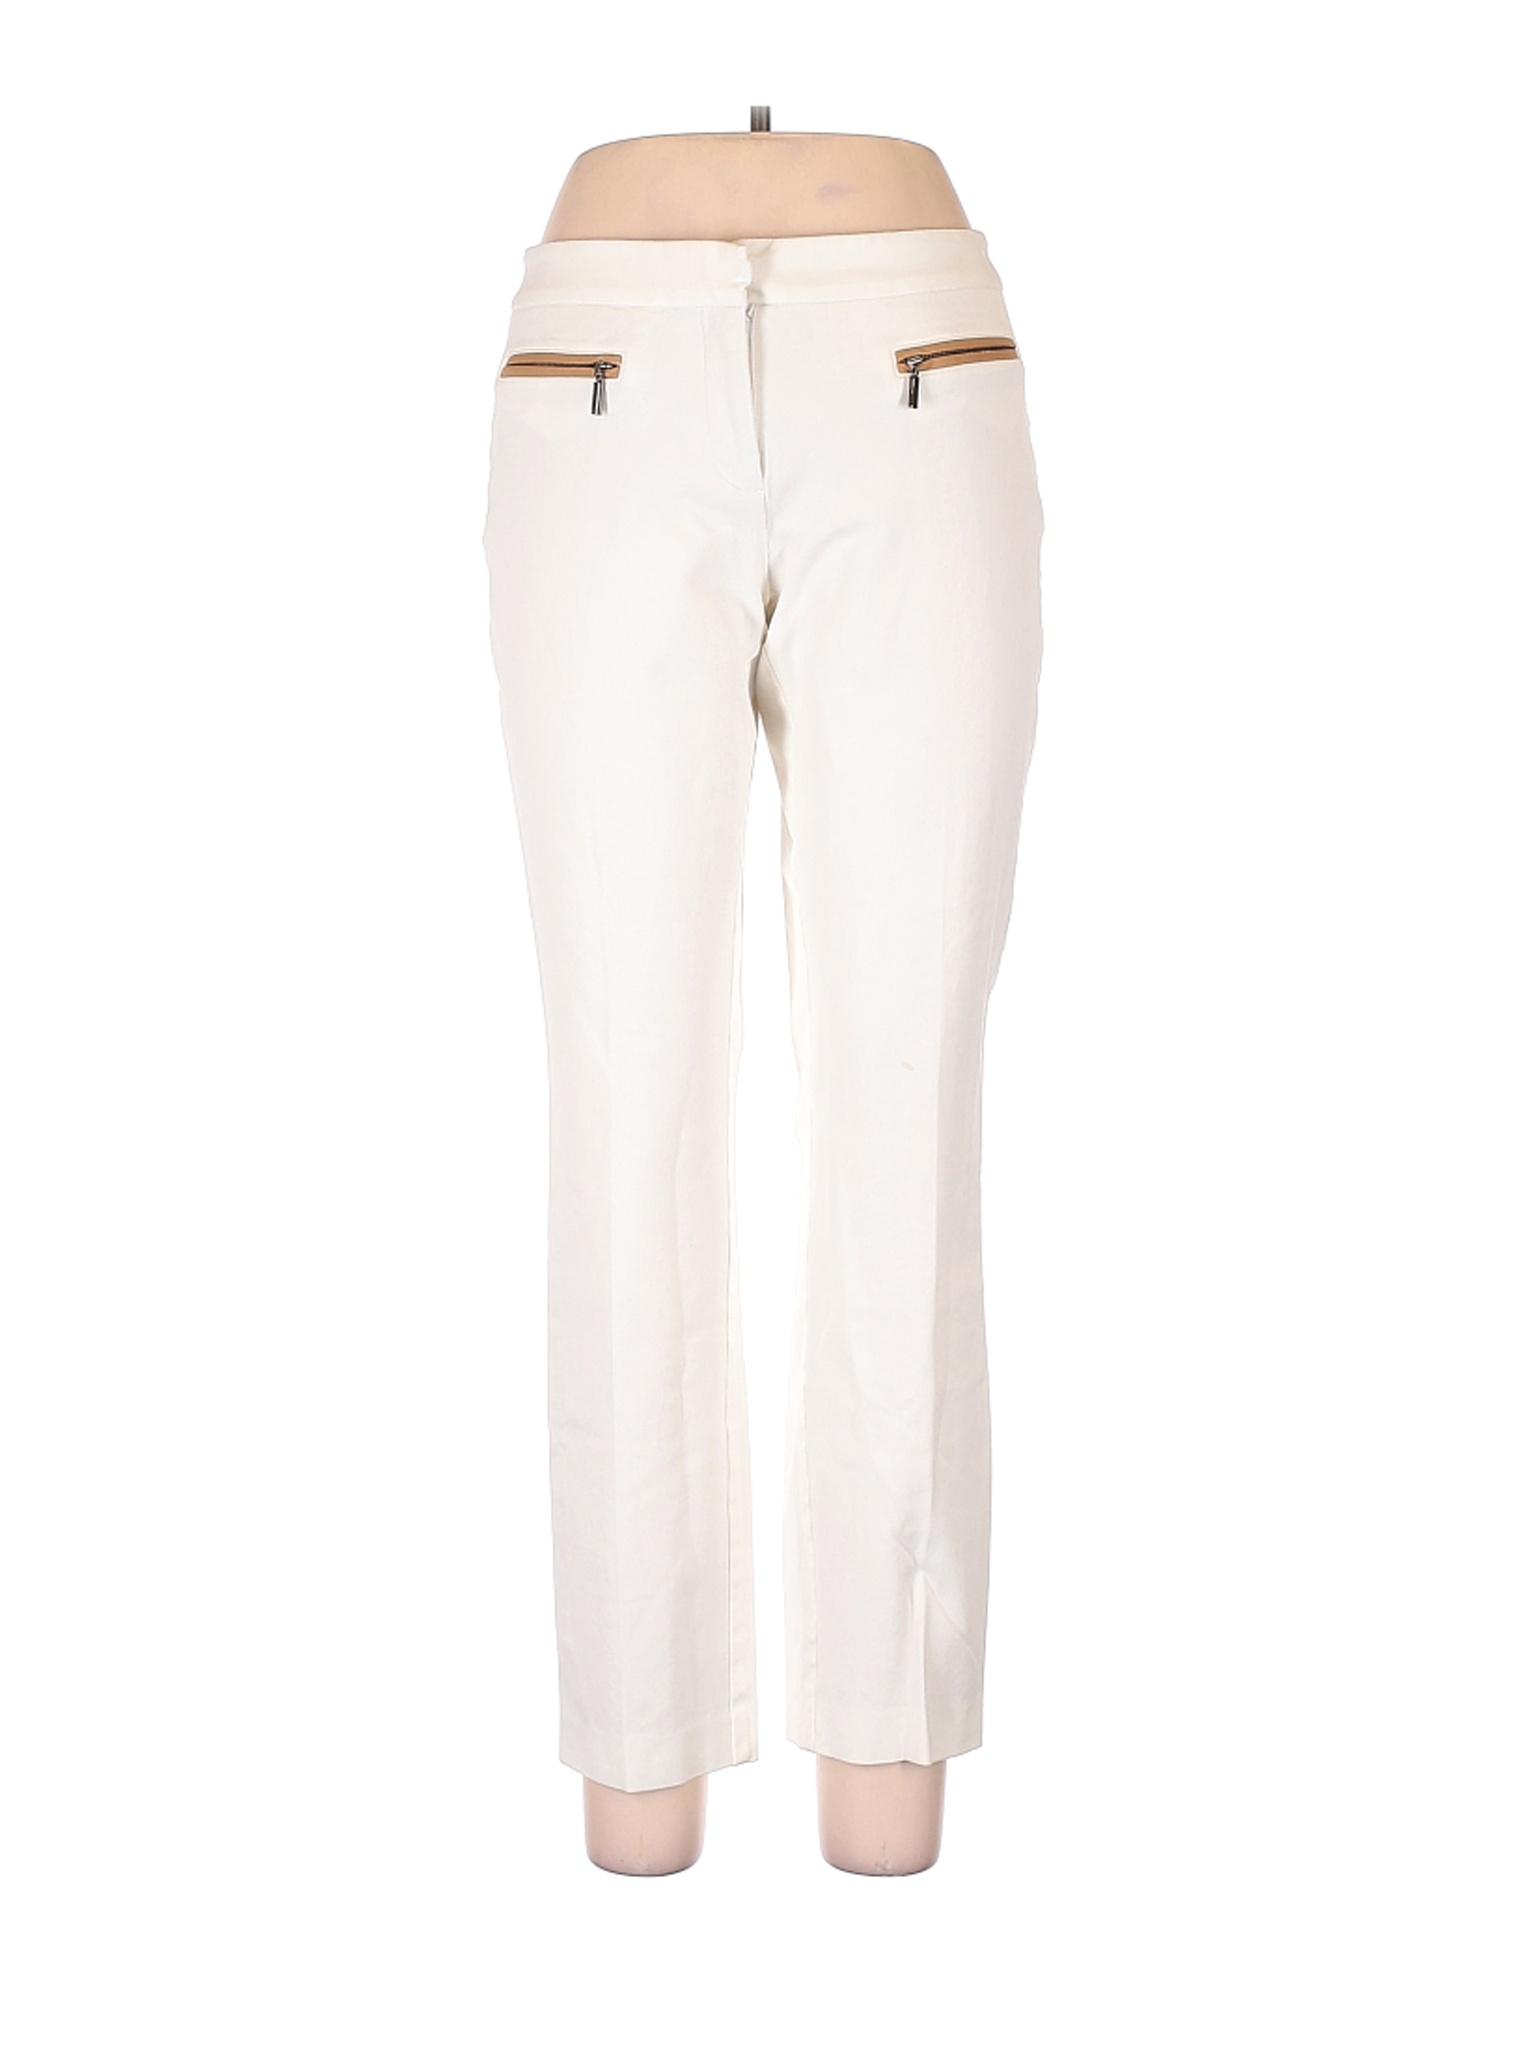 Alfani Women Ivory Dress Pants 10 | eBay